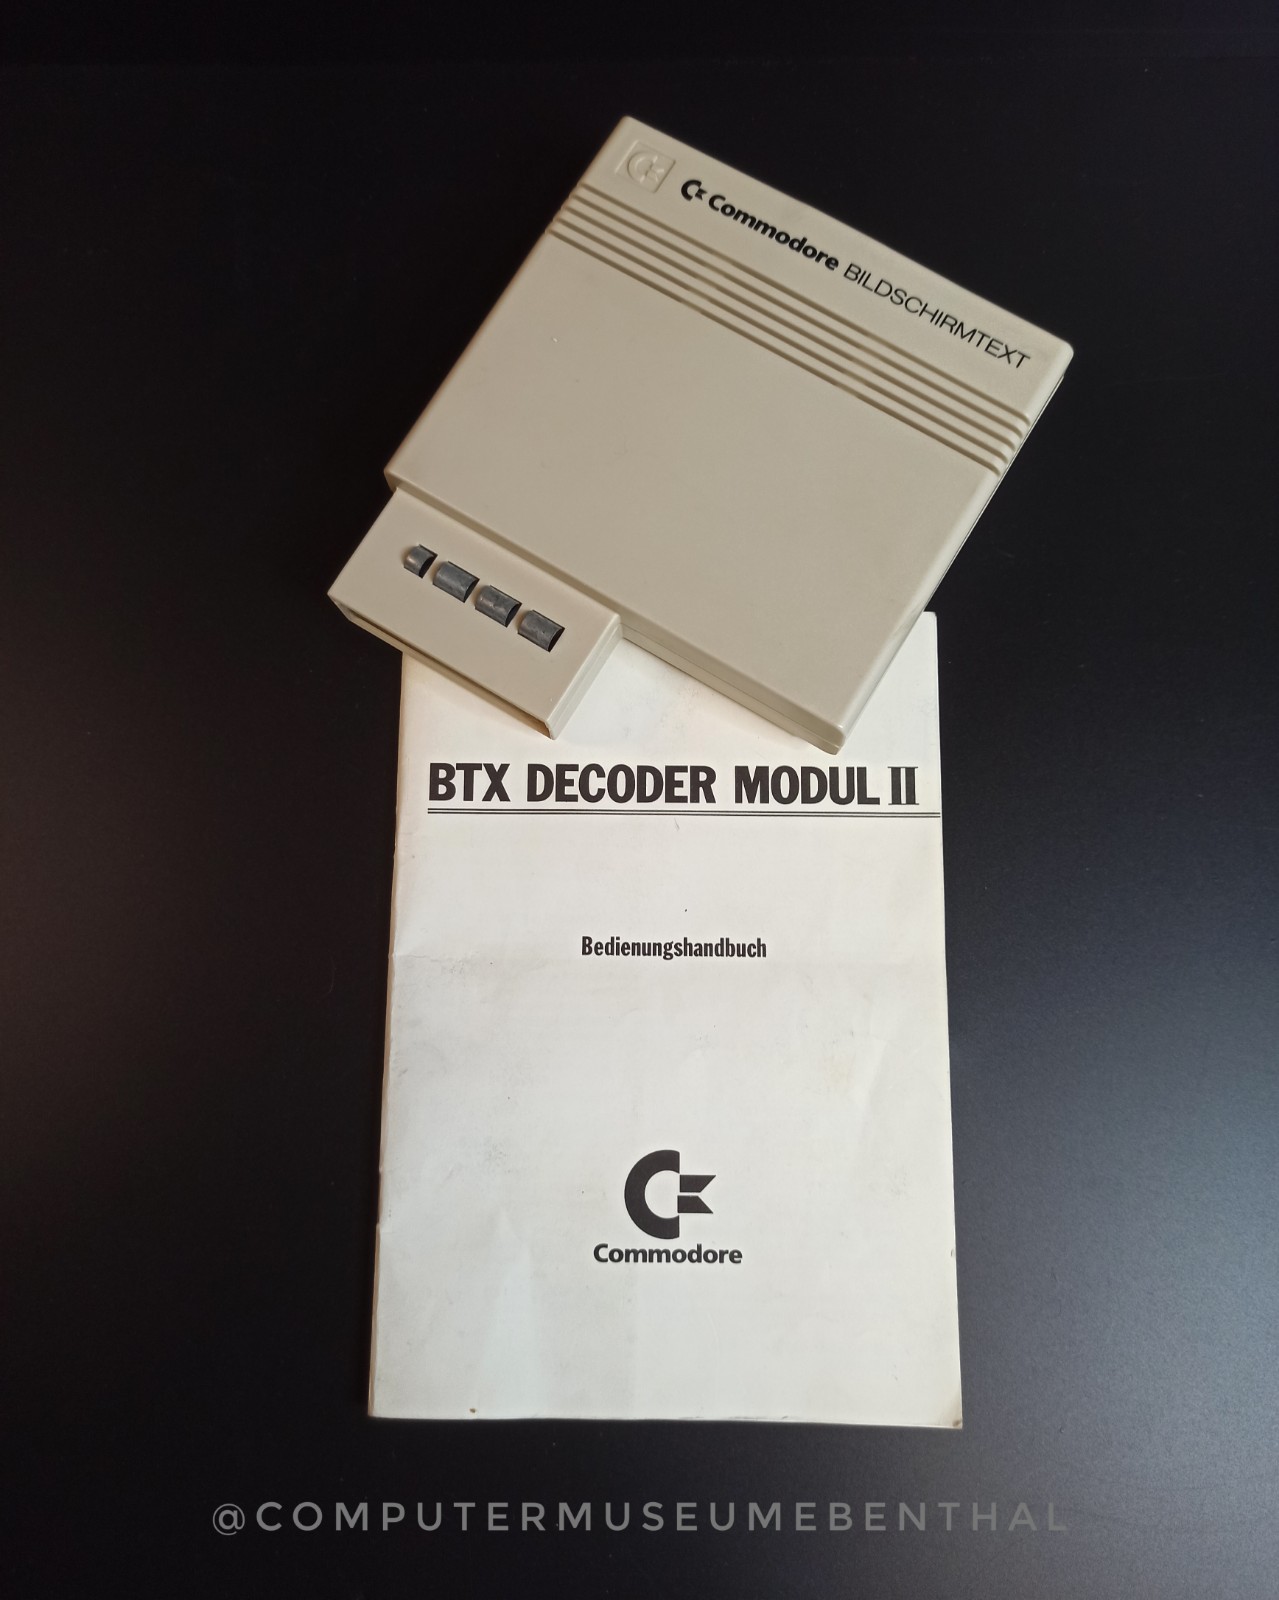 commodore btx decoder modul 2